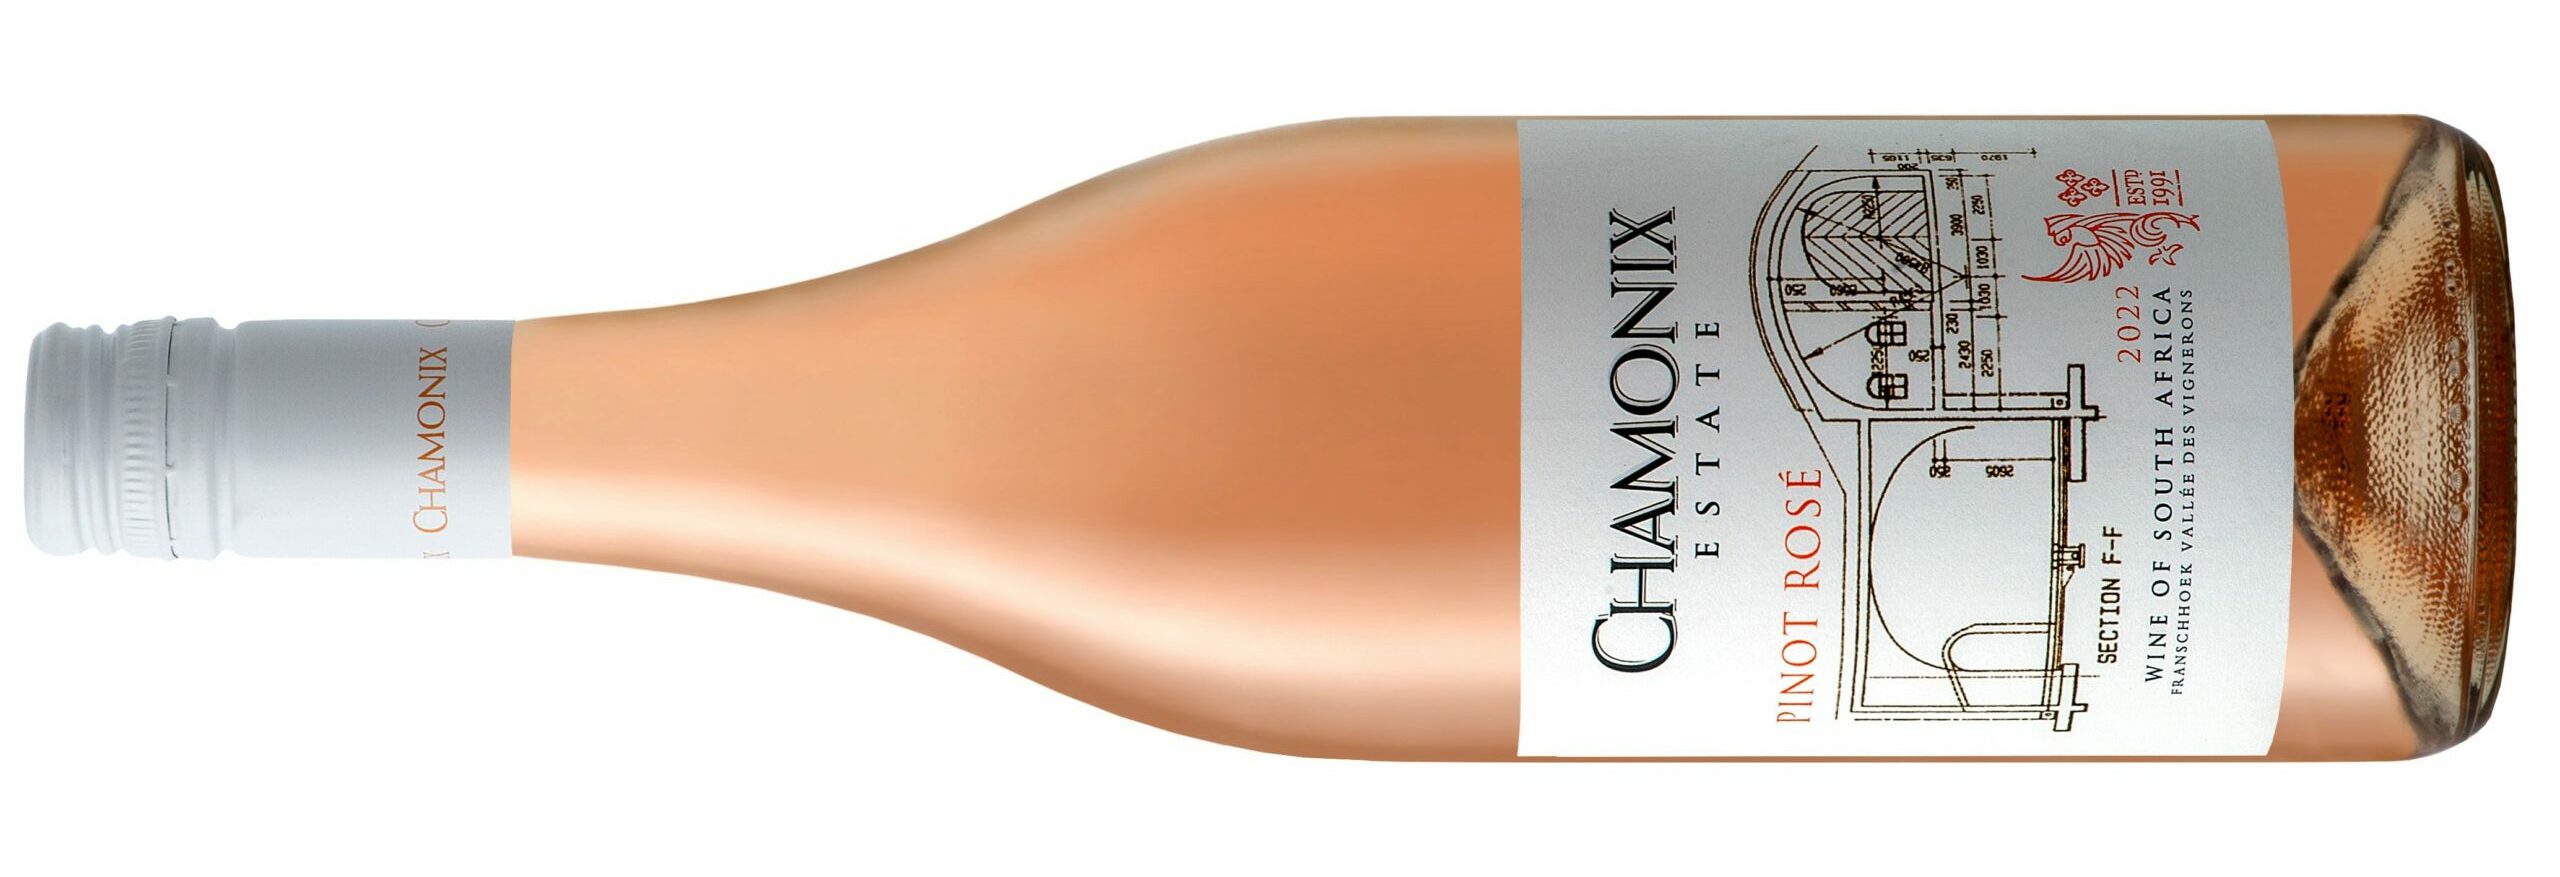 Chamonix Pinot Rosé Shows Class of Vintage 2022 photo